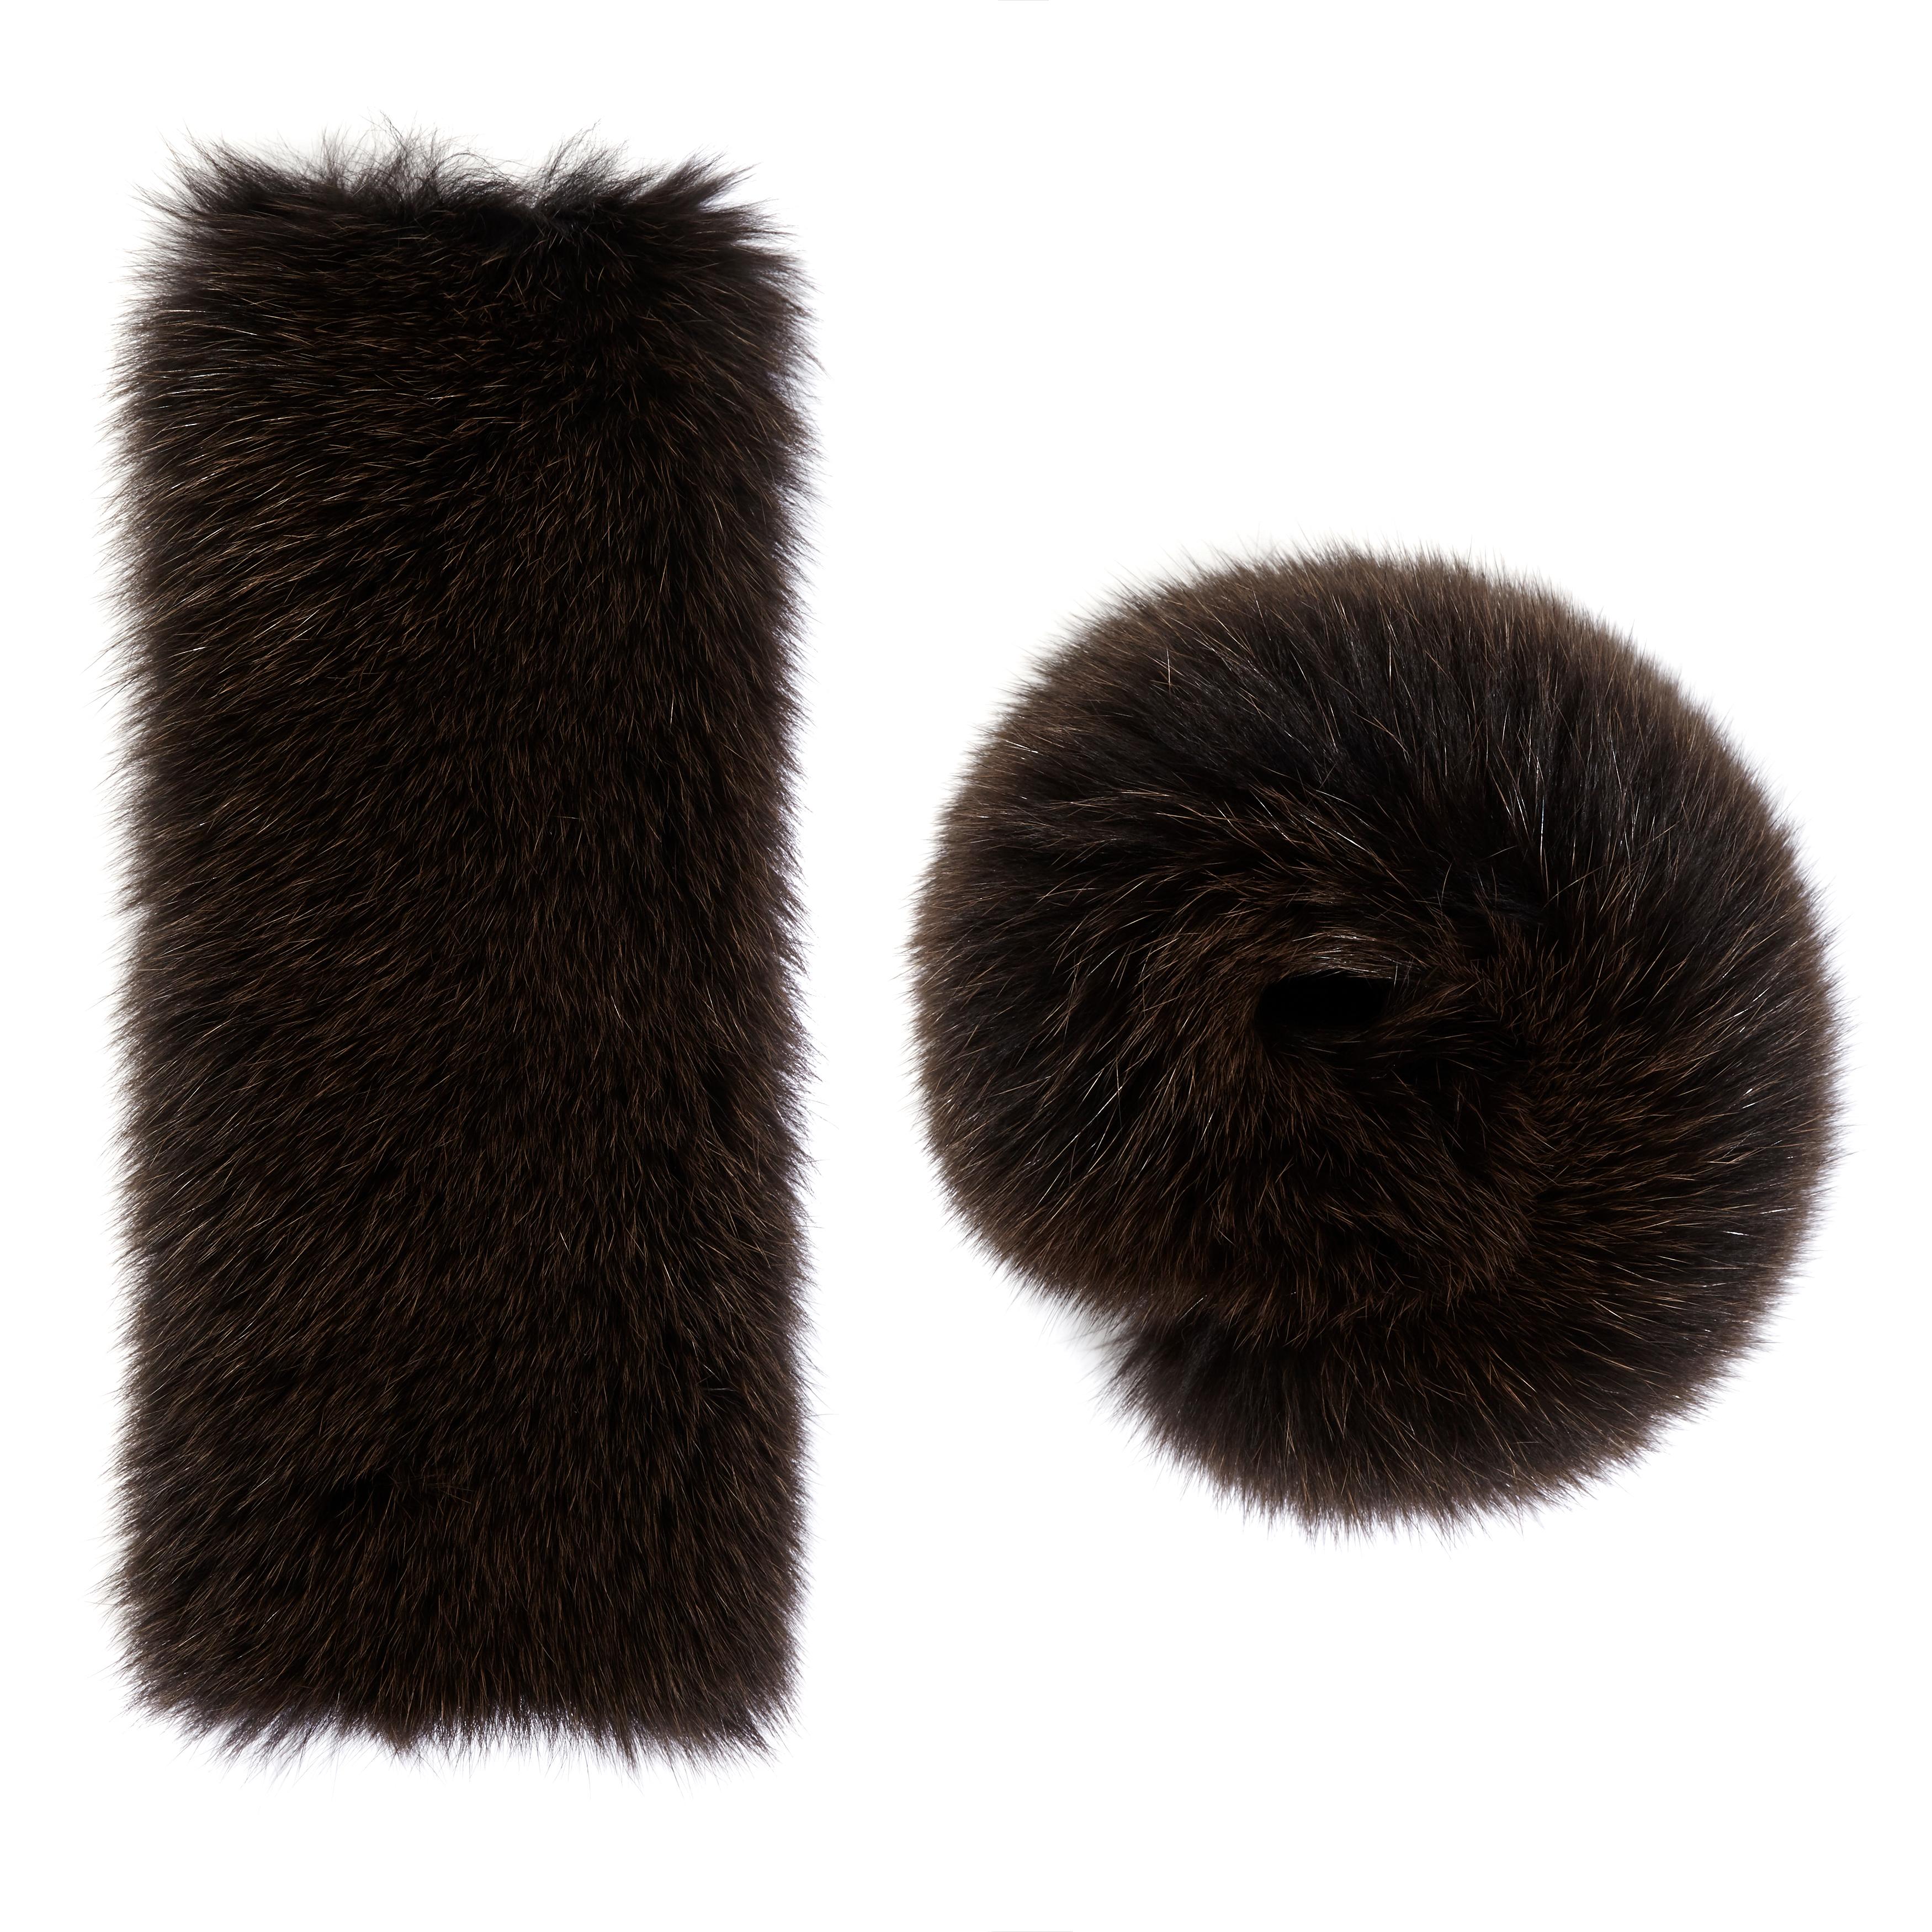 Verheyen London Large Pair of Snap on Fox Fur Cuffs in Soft Brown 